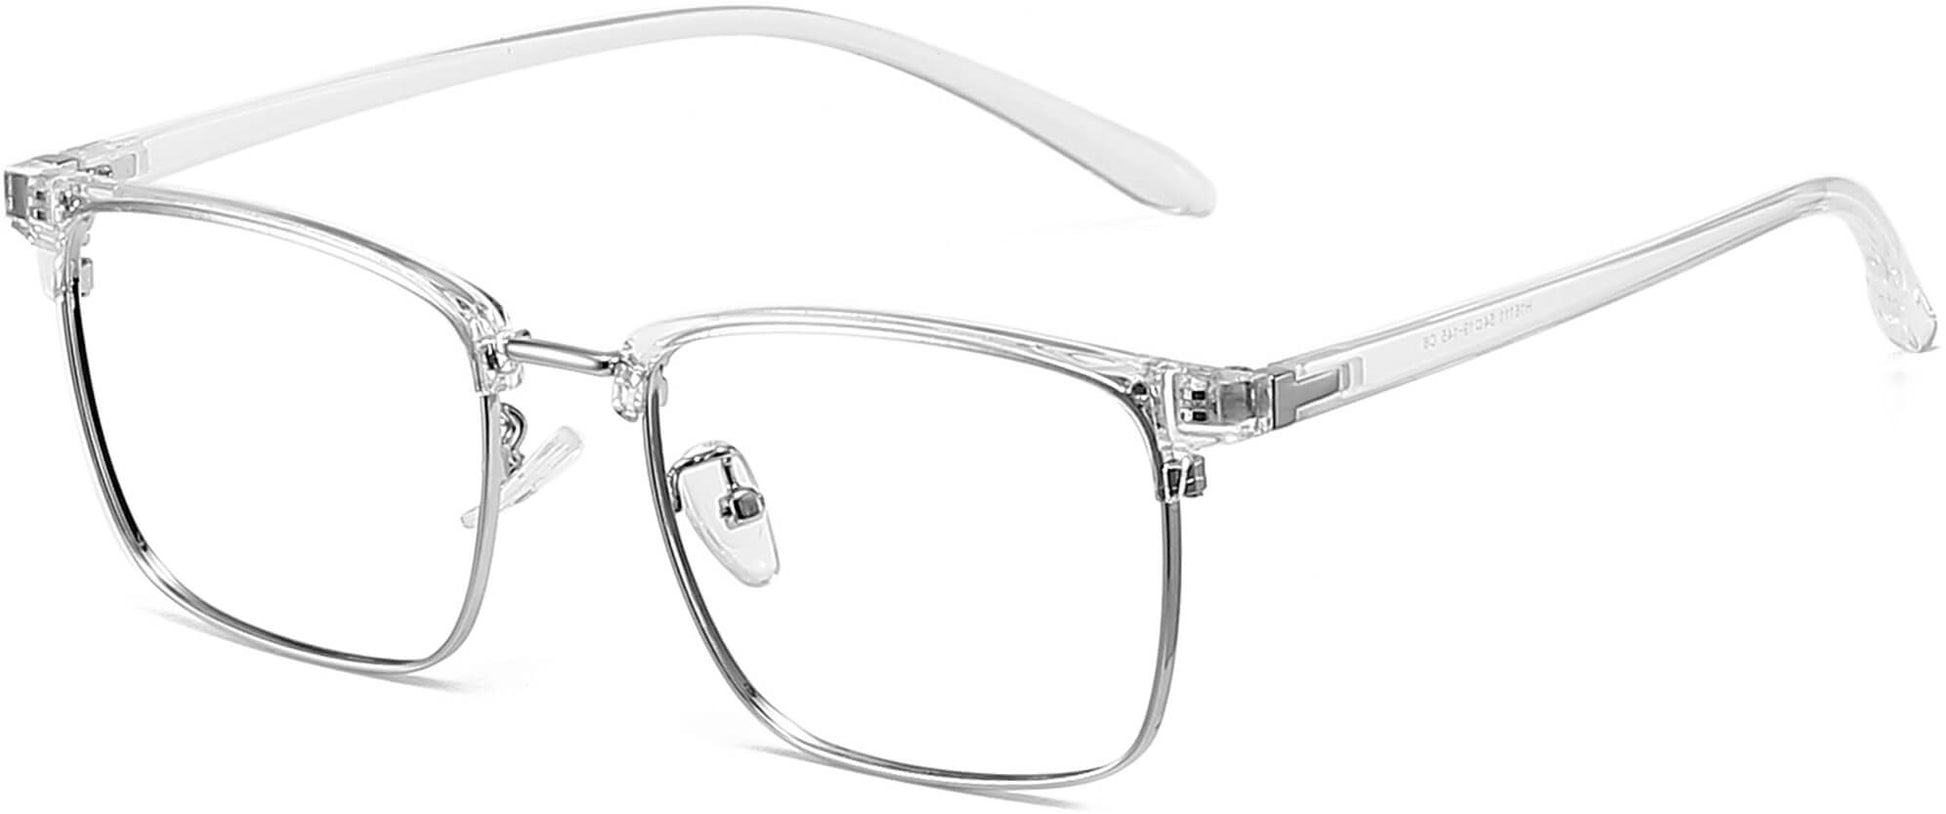 Fernando Browline Clear Eyeglasses from ANRRI, angle view